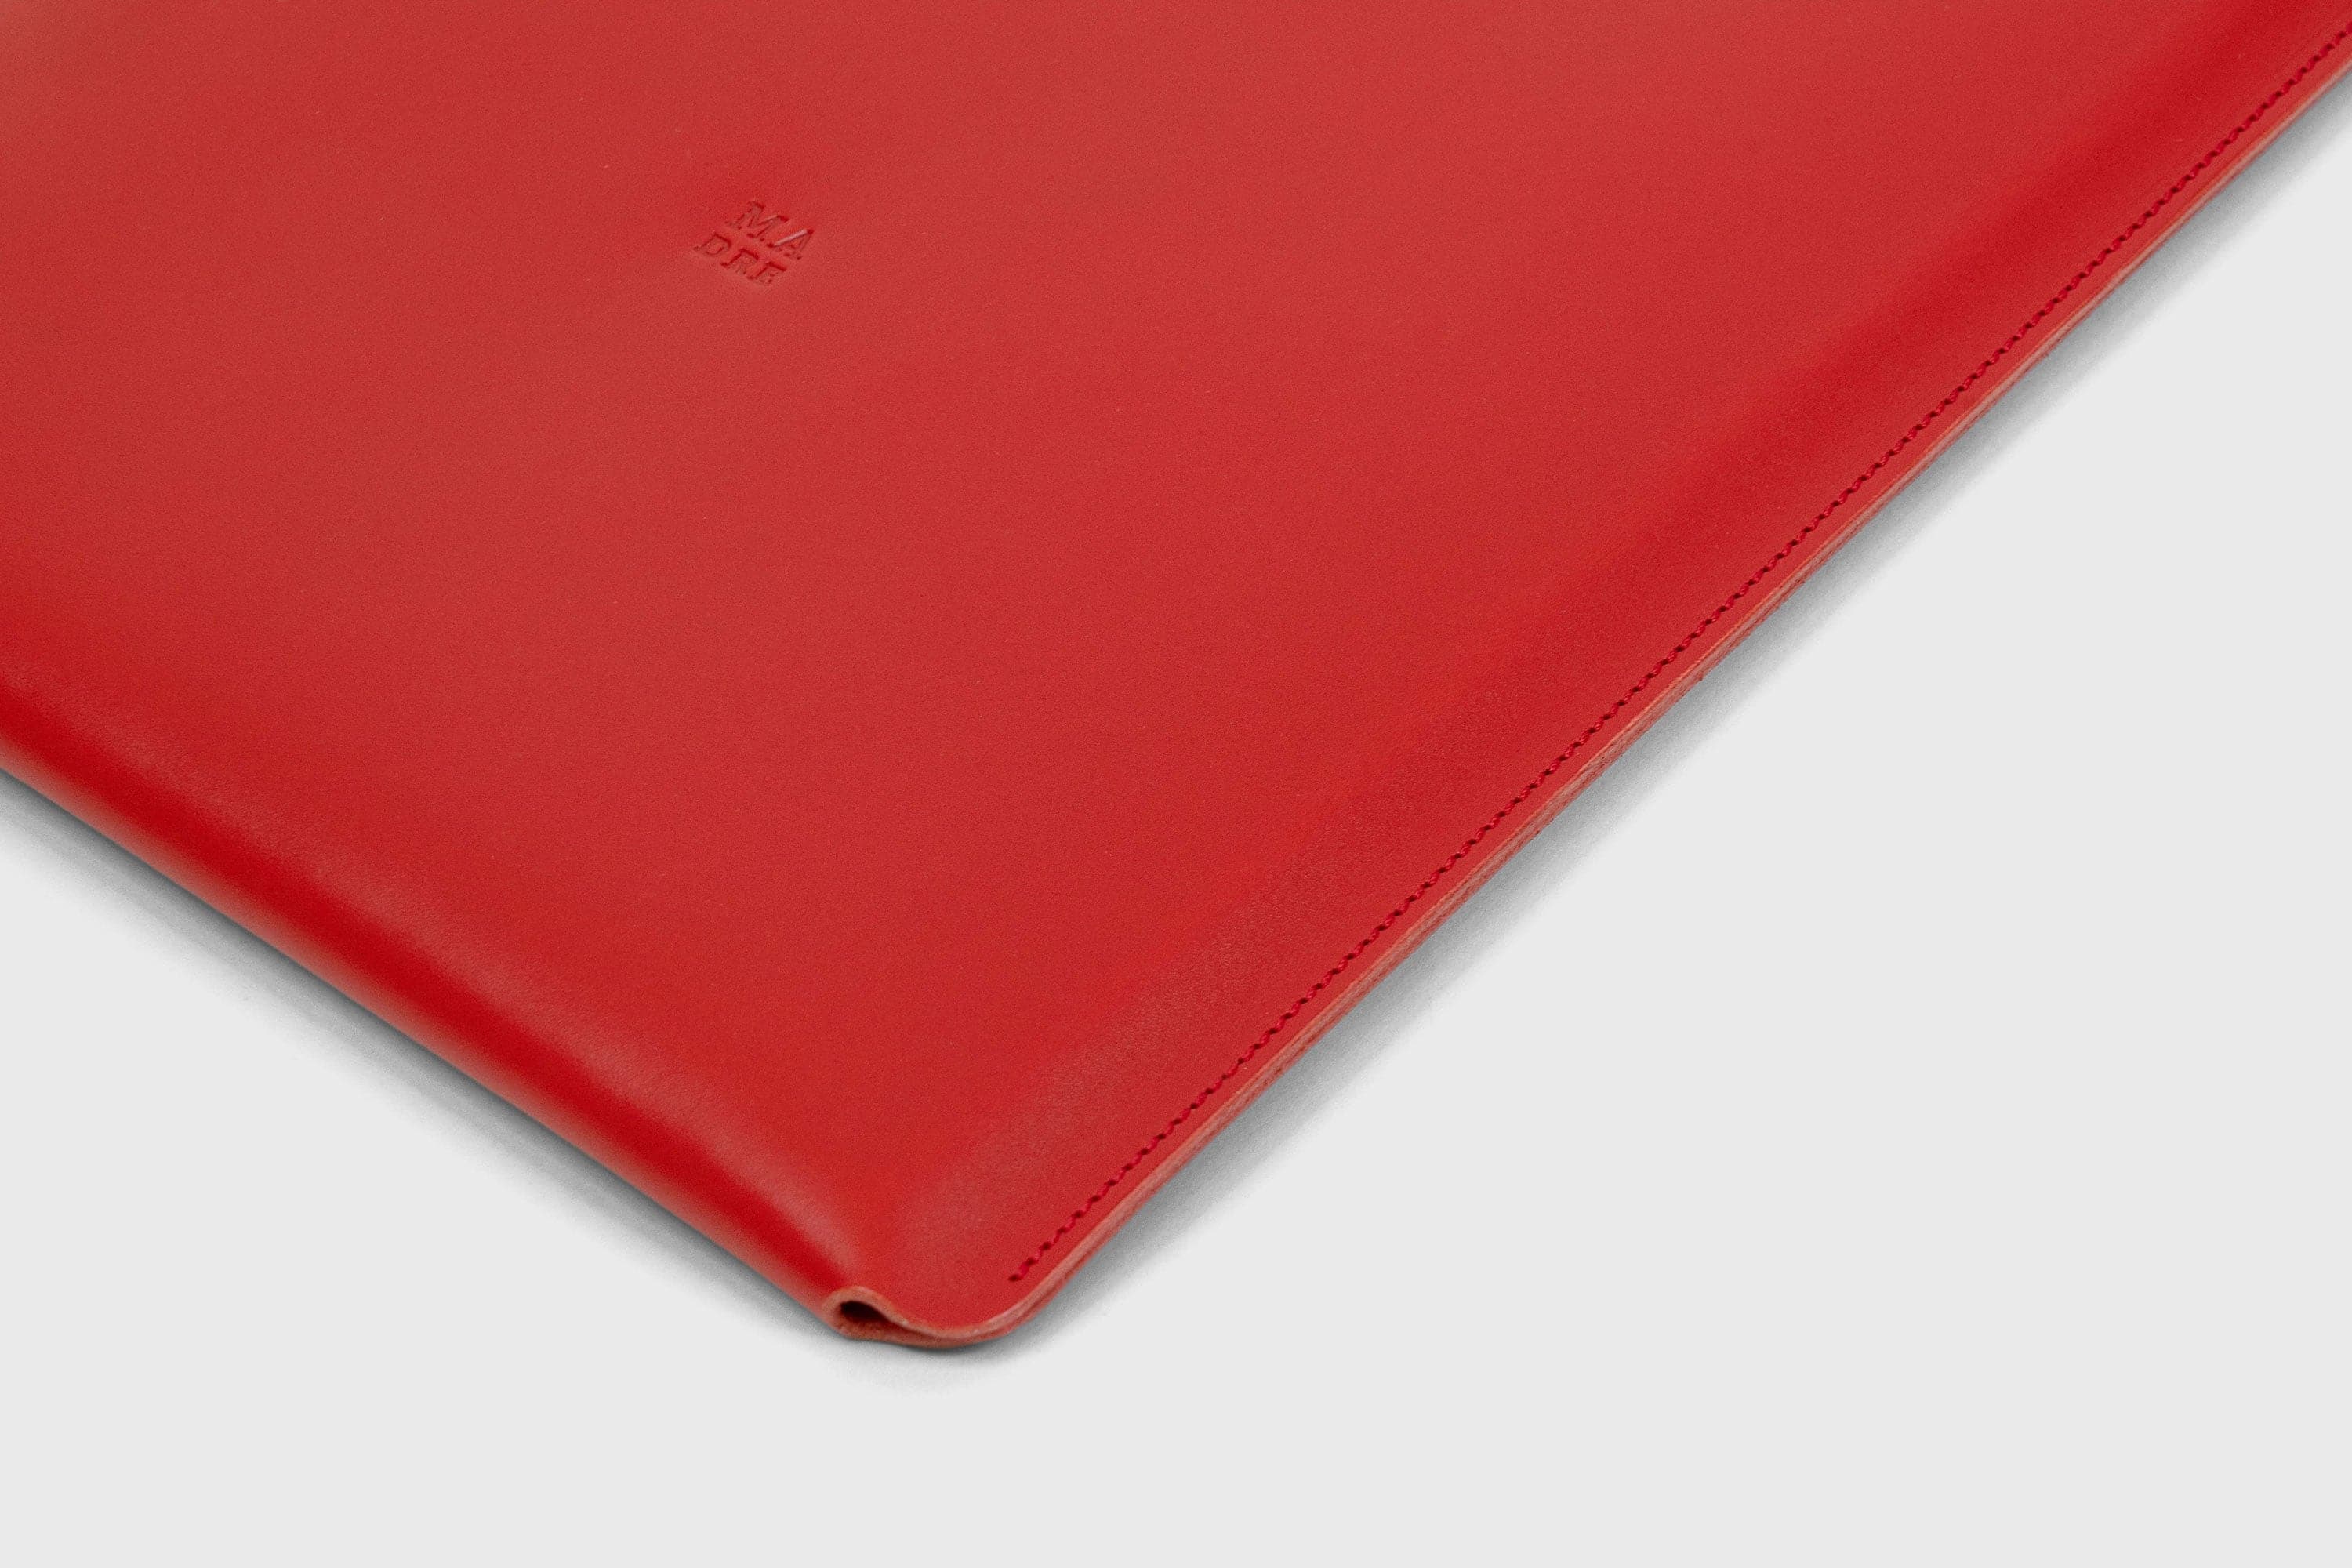 MacBook Pro 14 Inch Sleeve Leather Slip Case Bag Red 2021 Manuel Dreesmann Atelier Madre Barcelona